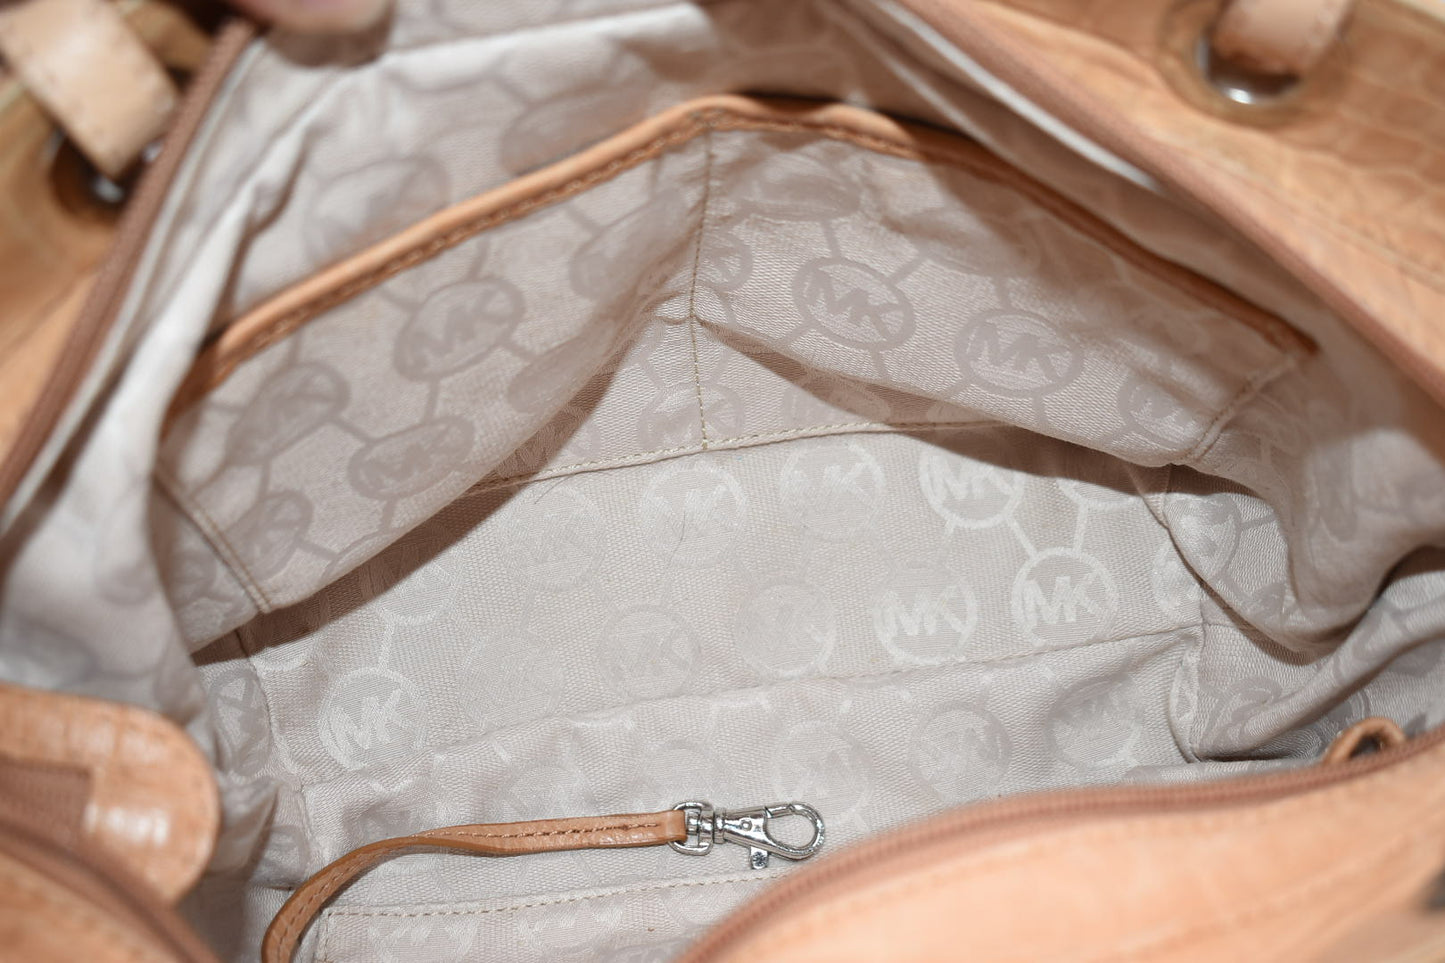 Michael Kors Leather Embossed Croc Tote Bag